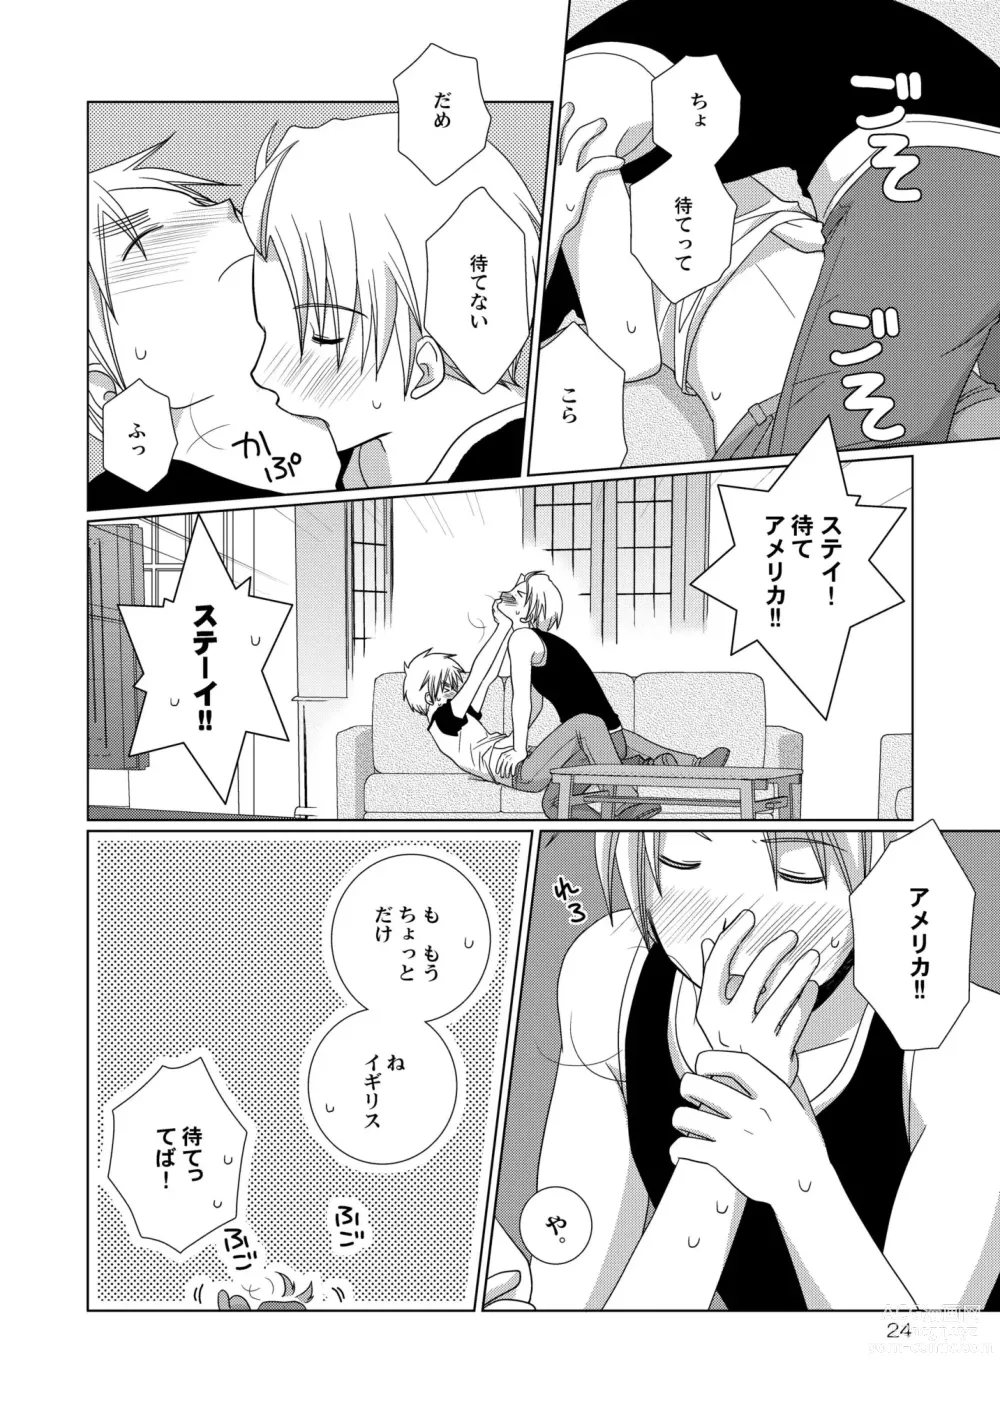 Page 24 of doujinshi [Hidariya